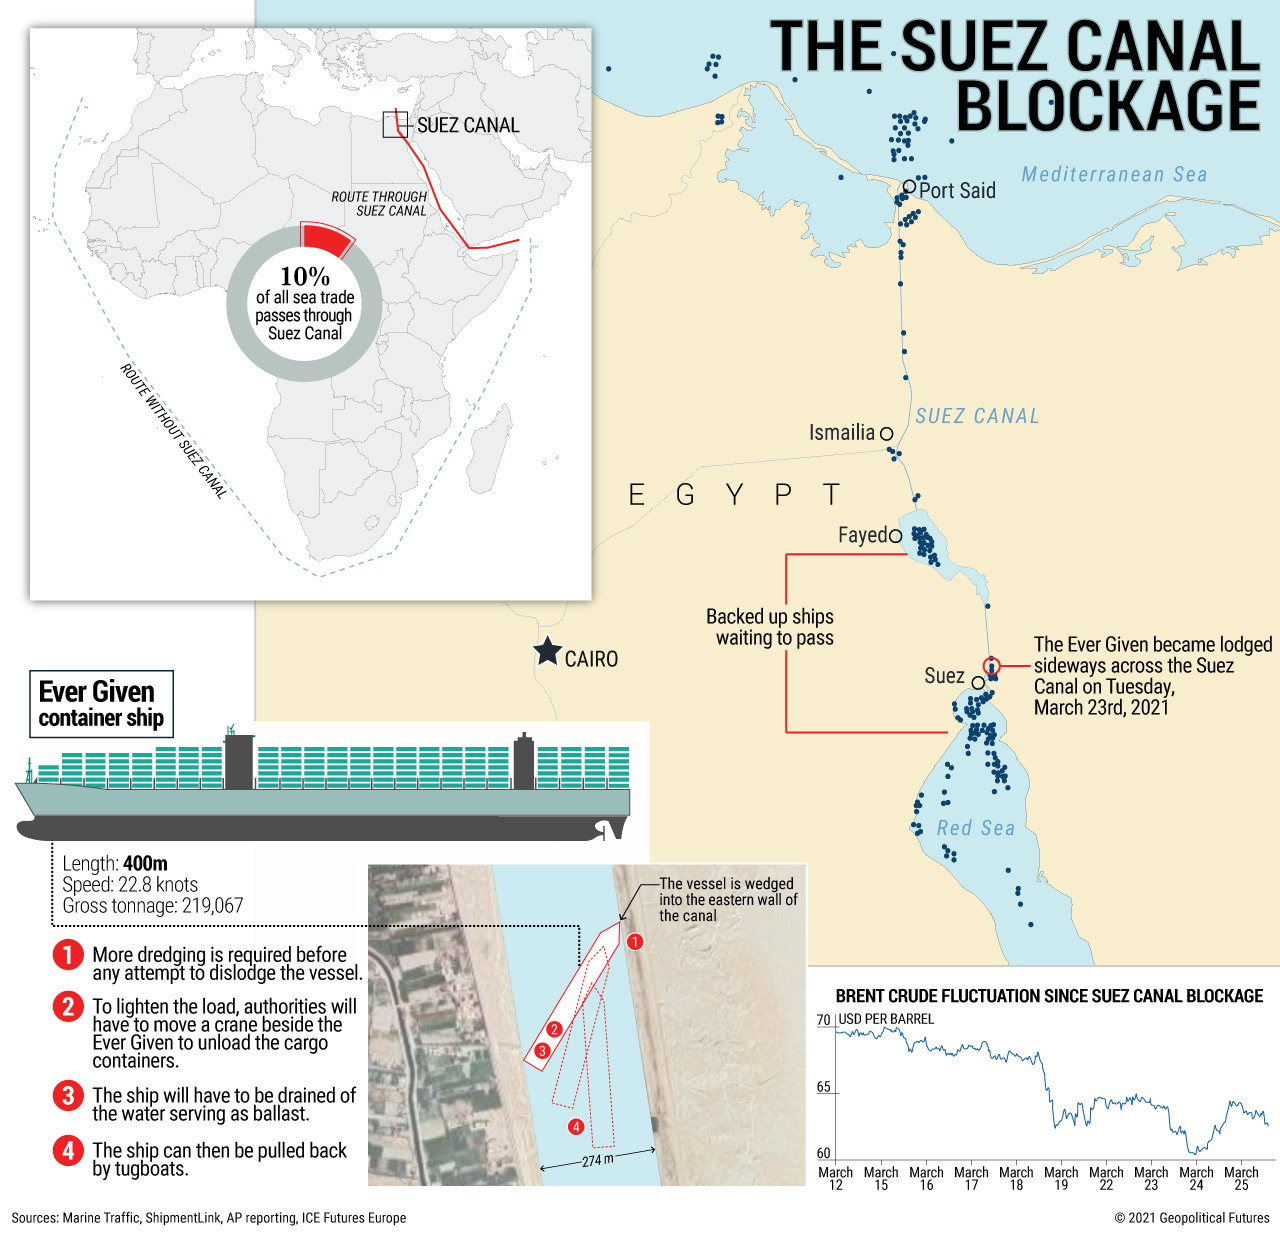 The Suez Canal Blockage